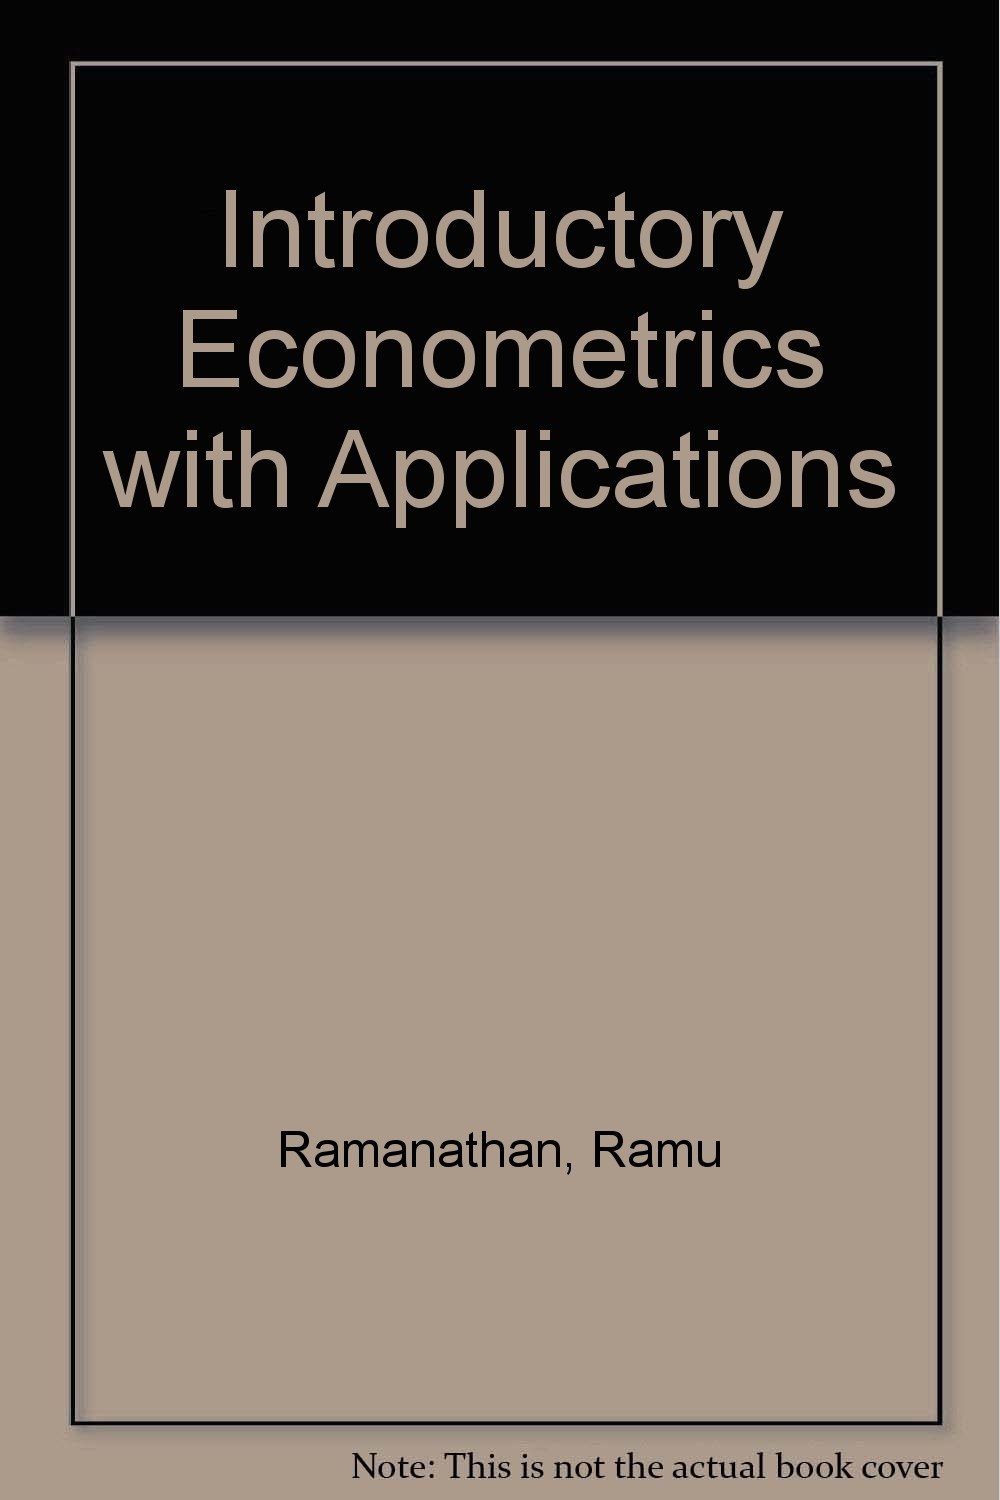 koutsoyiannis theory of econometrics pdf